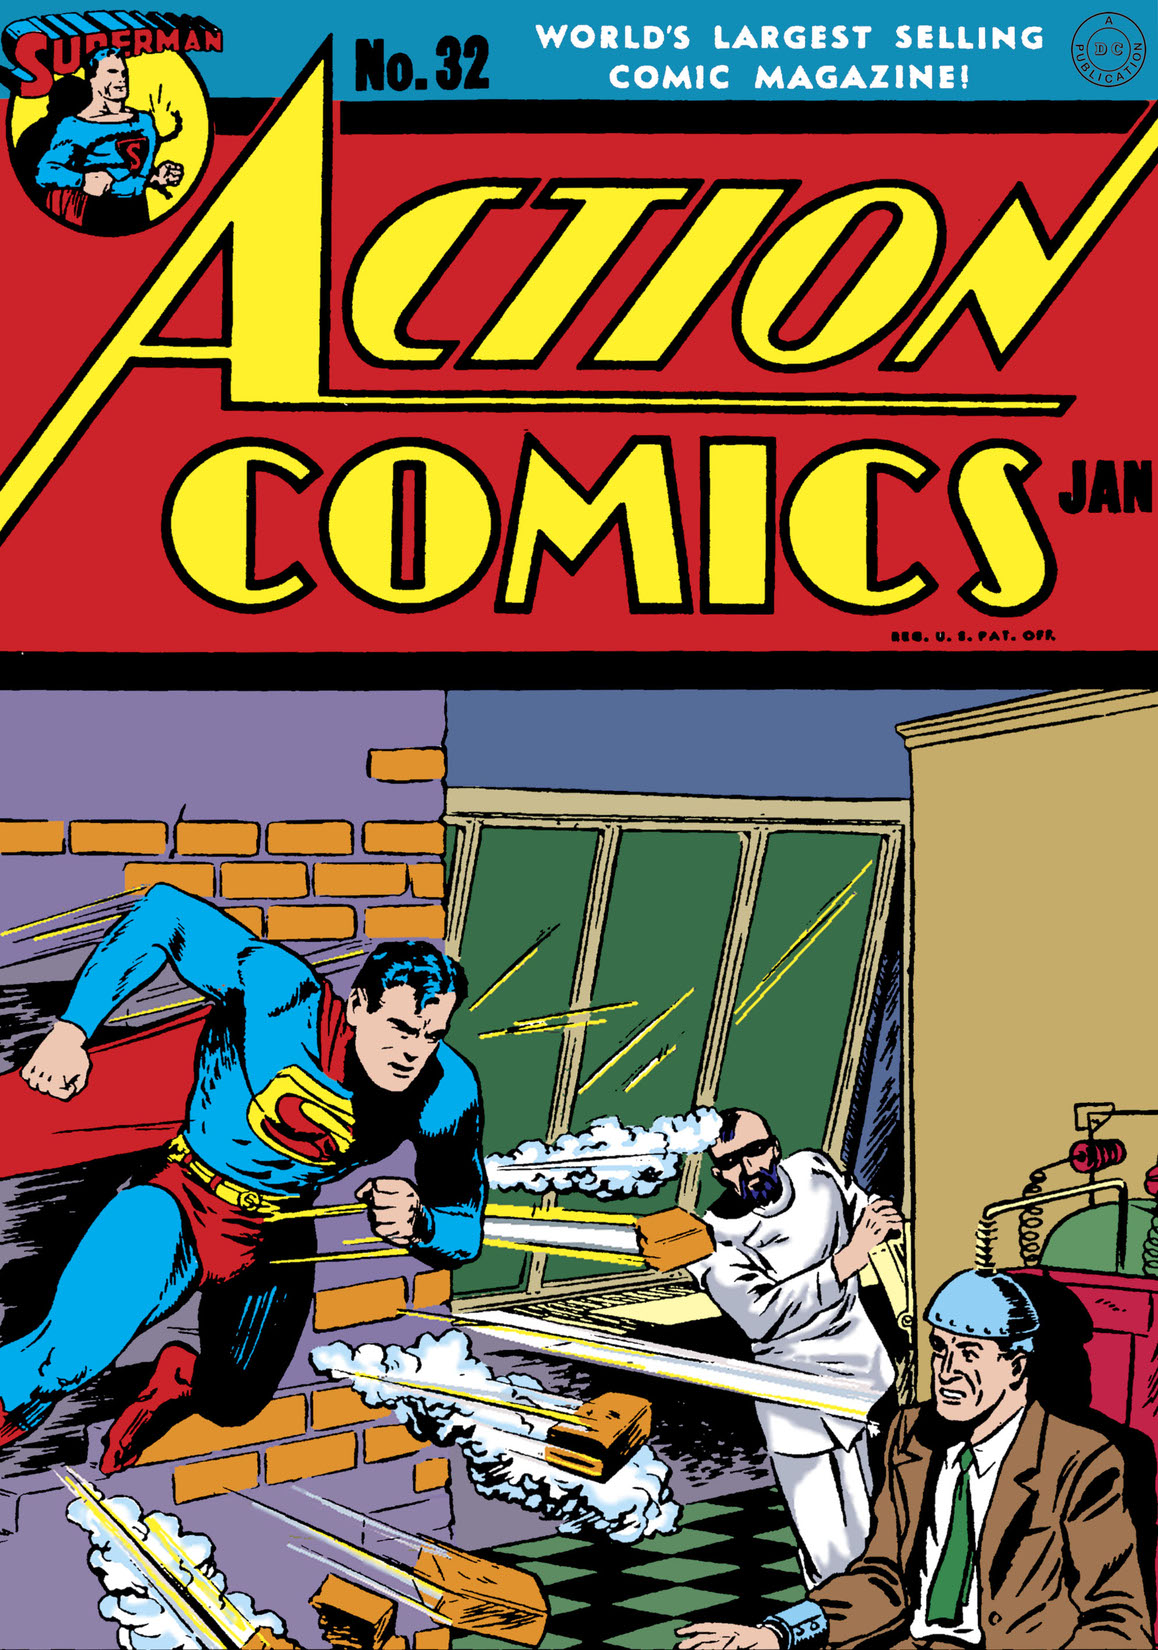 Action Comics (1938-) #32 preview images